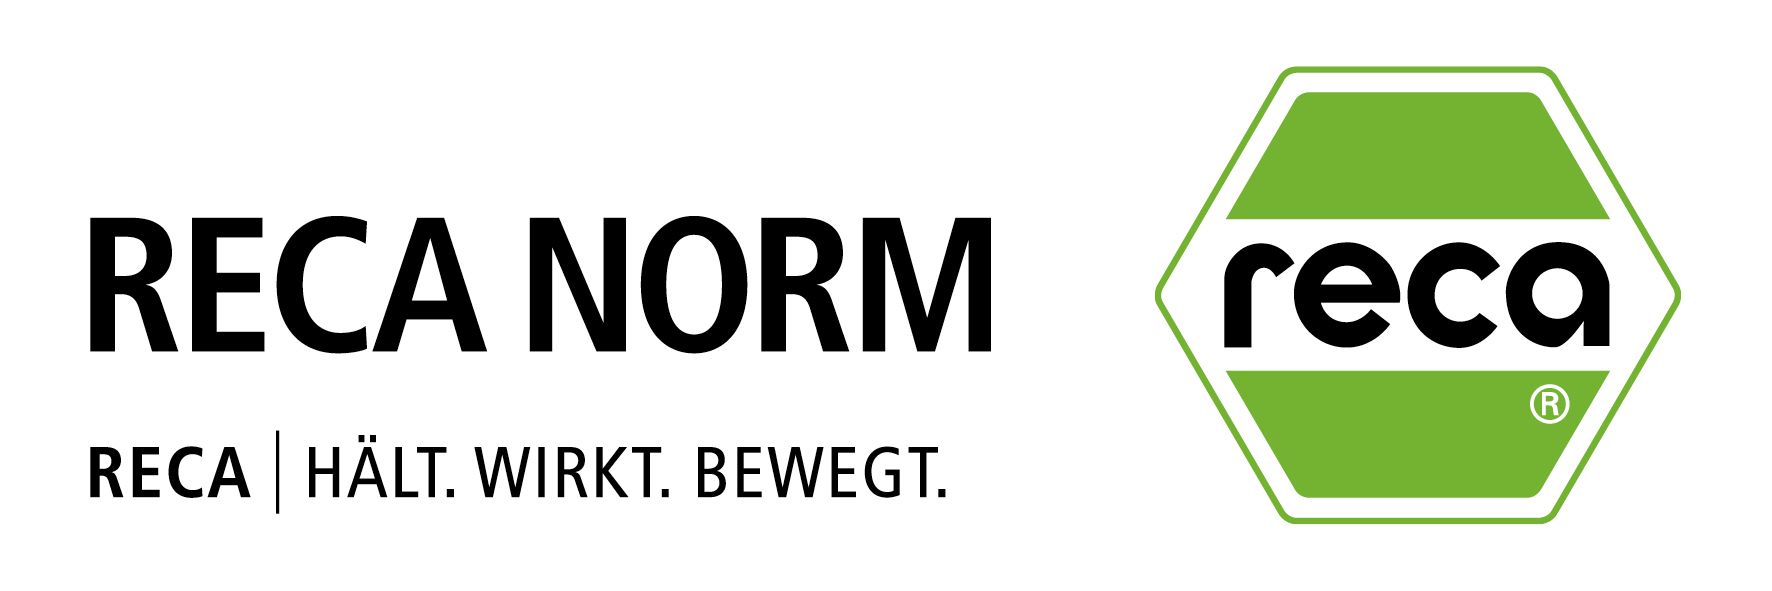 Reca_Norm_Logo 